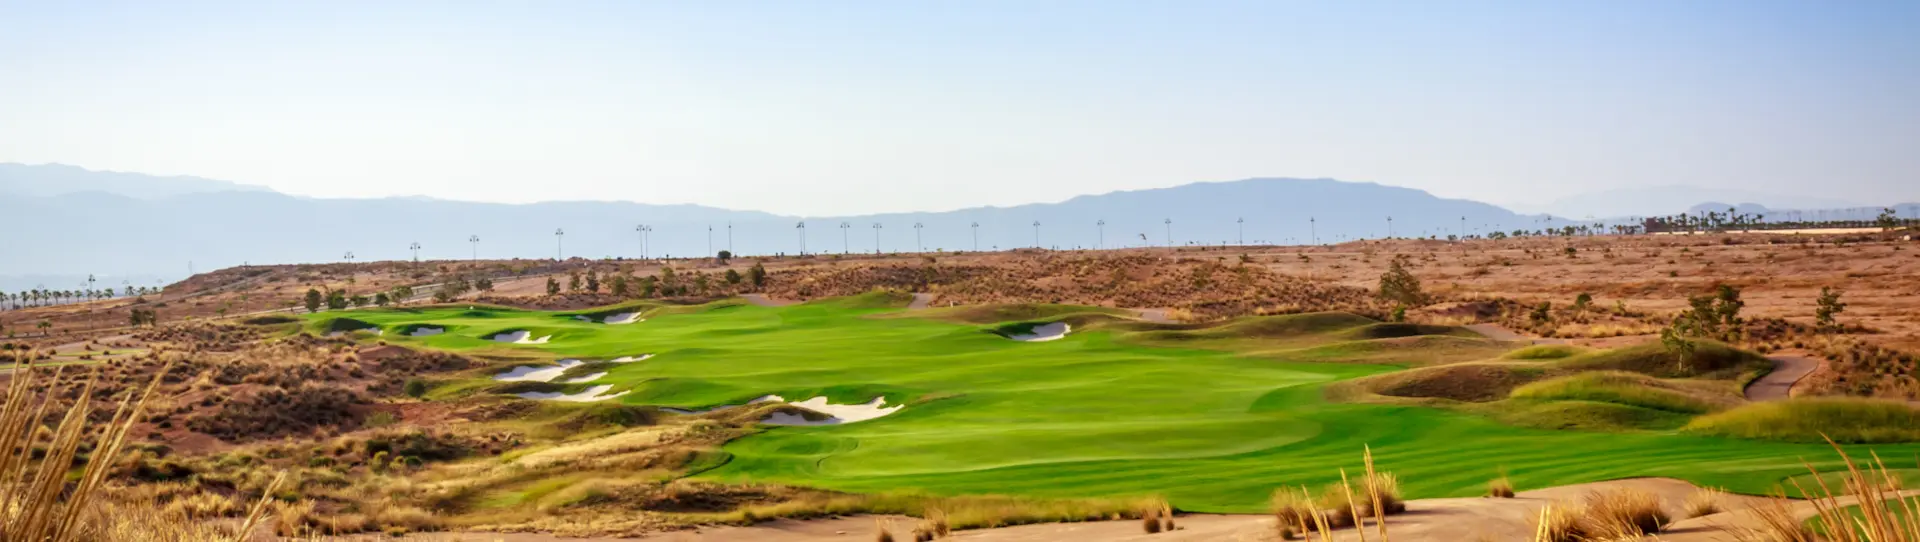 Spain golf courses - Alhama Signature - Photo 3